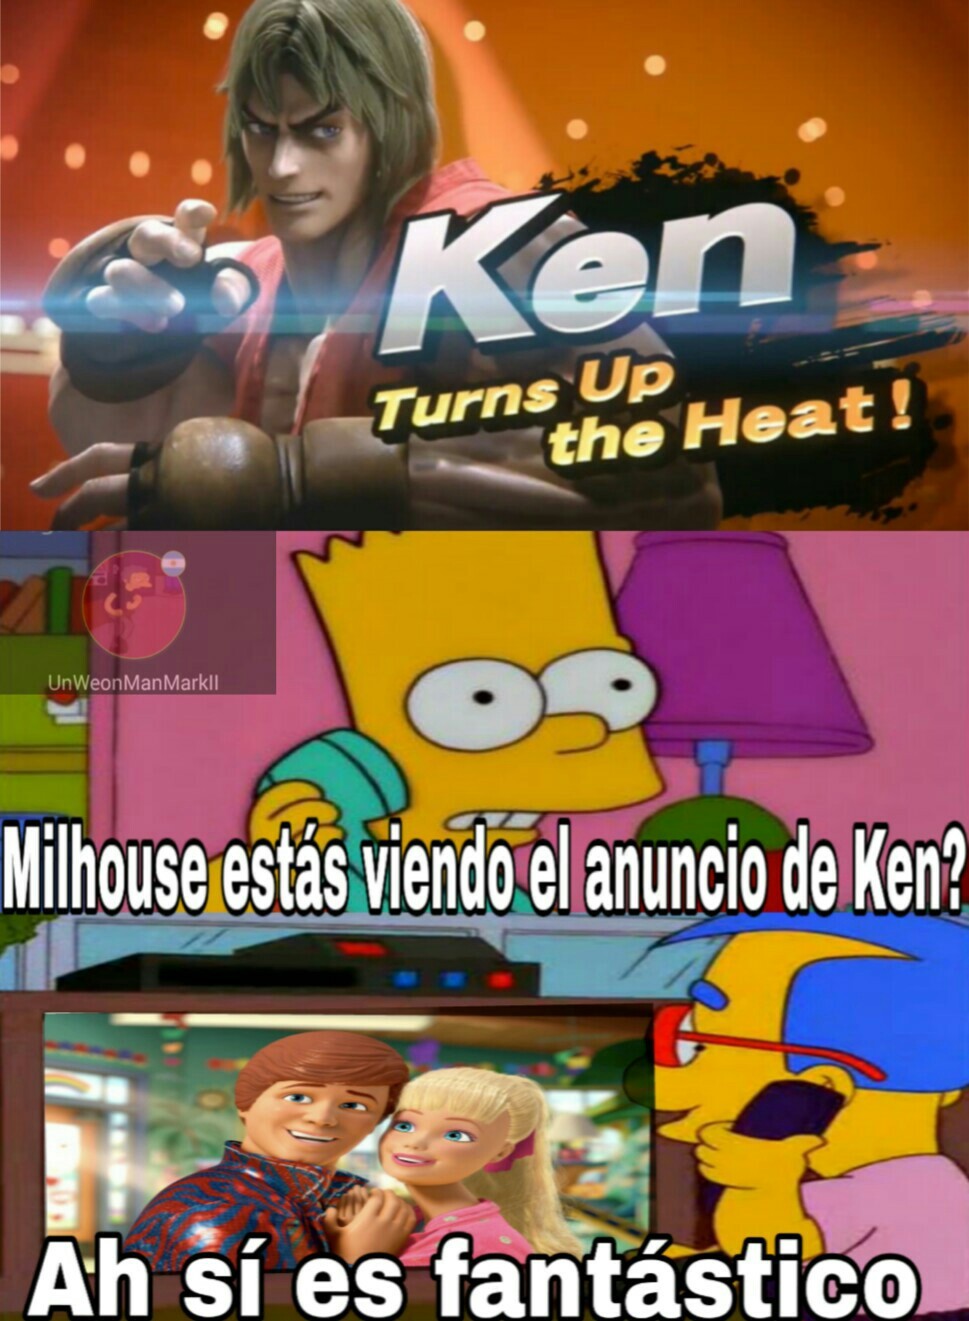 Ken vs Ken ¿quien ganara? - meme